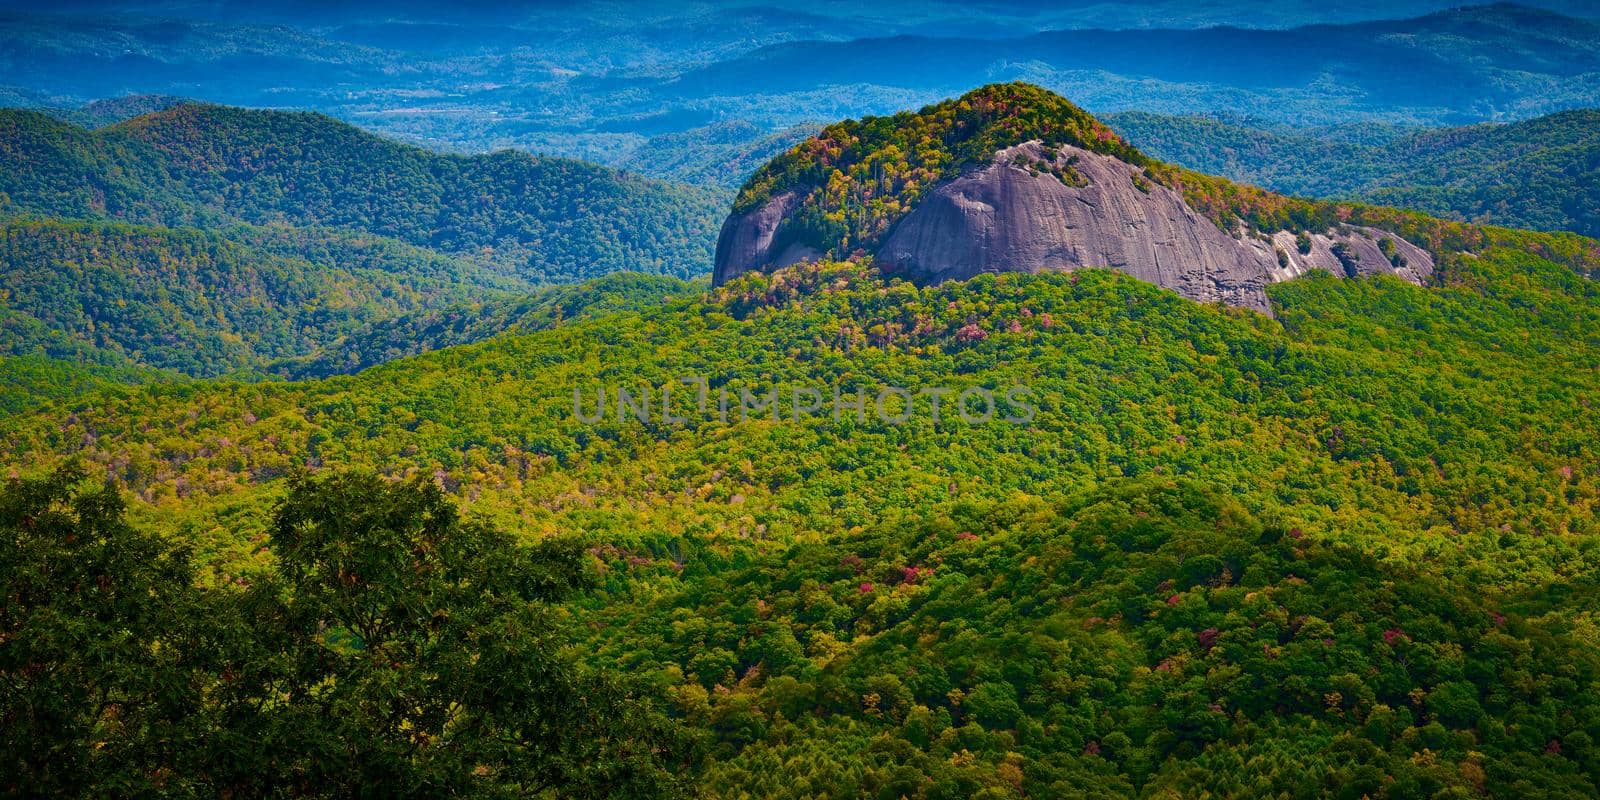 Looking Glass Rock in Pisgah National Forest, North Carolina, USA at early fall season. by patrickstock